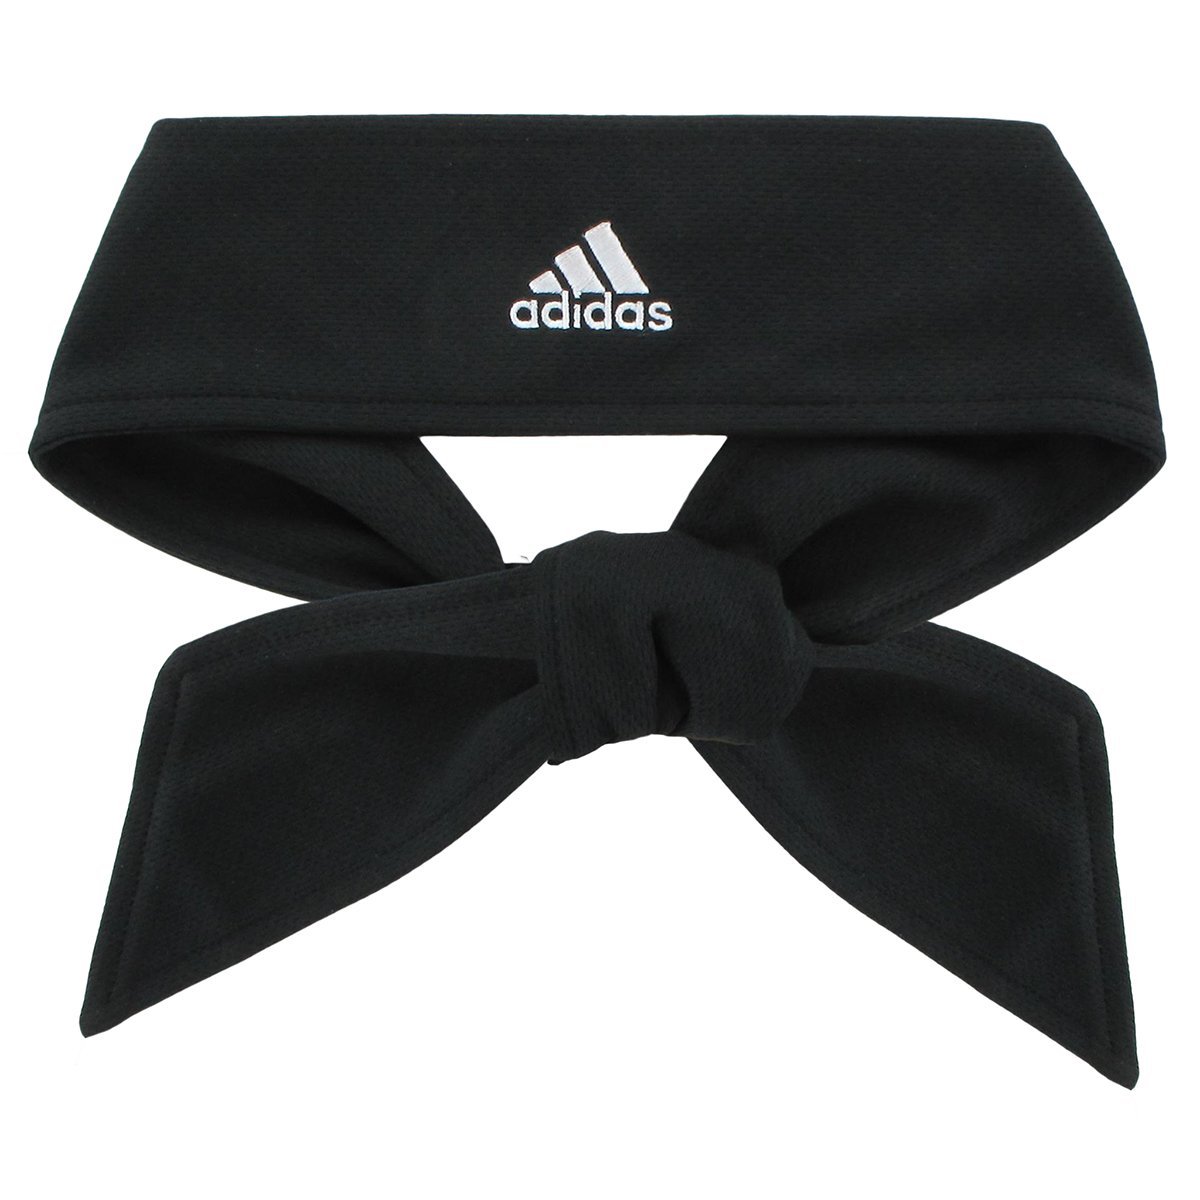 Best Adidas Sweatbands - BestSweatbands.com